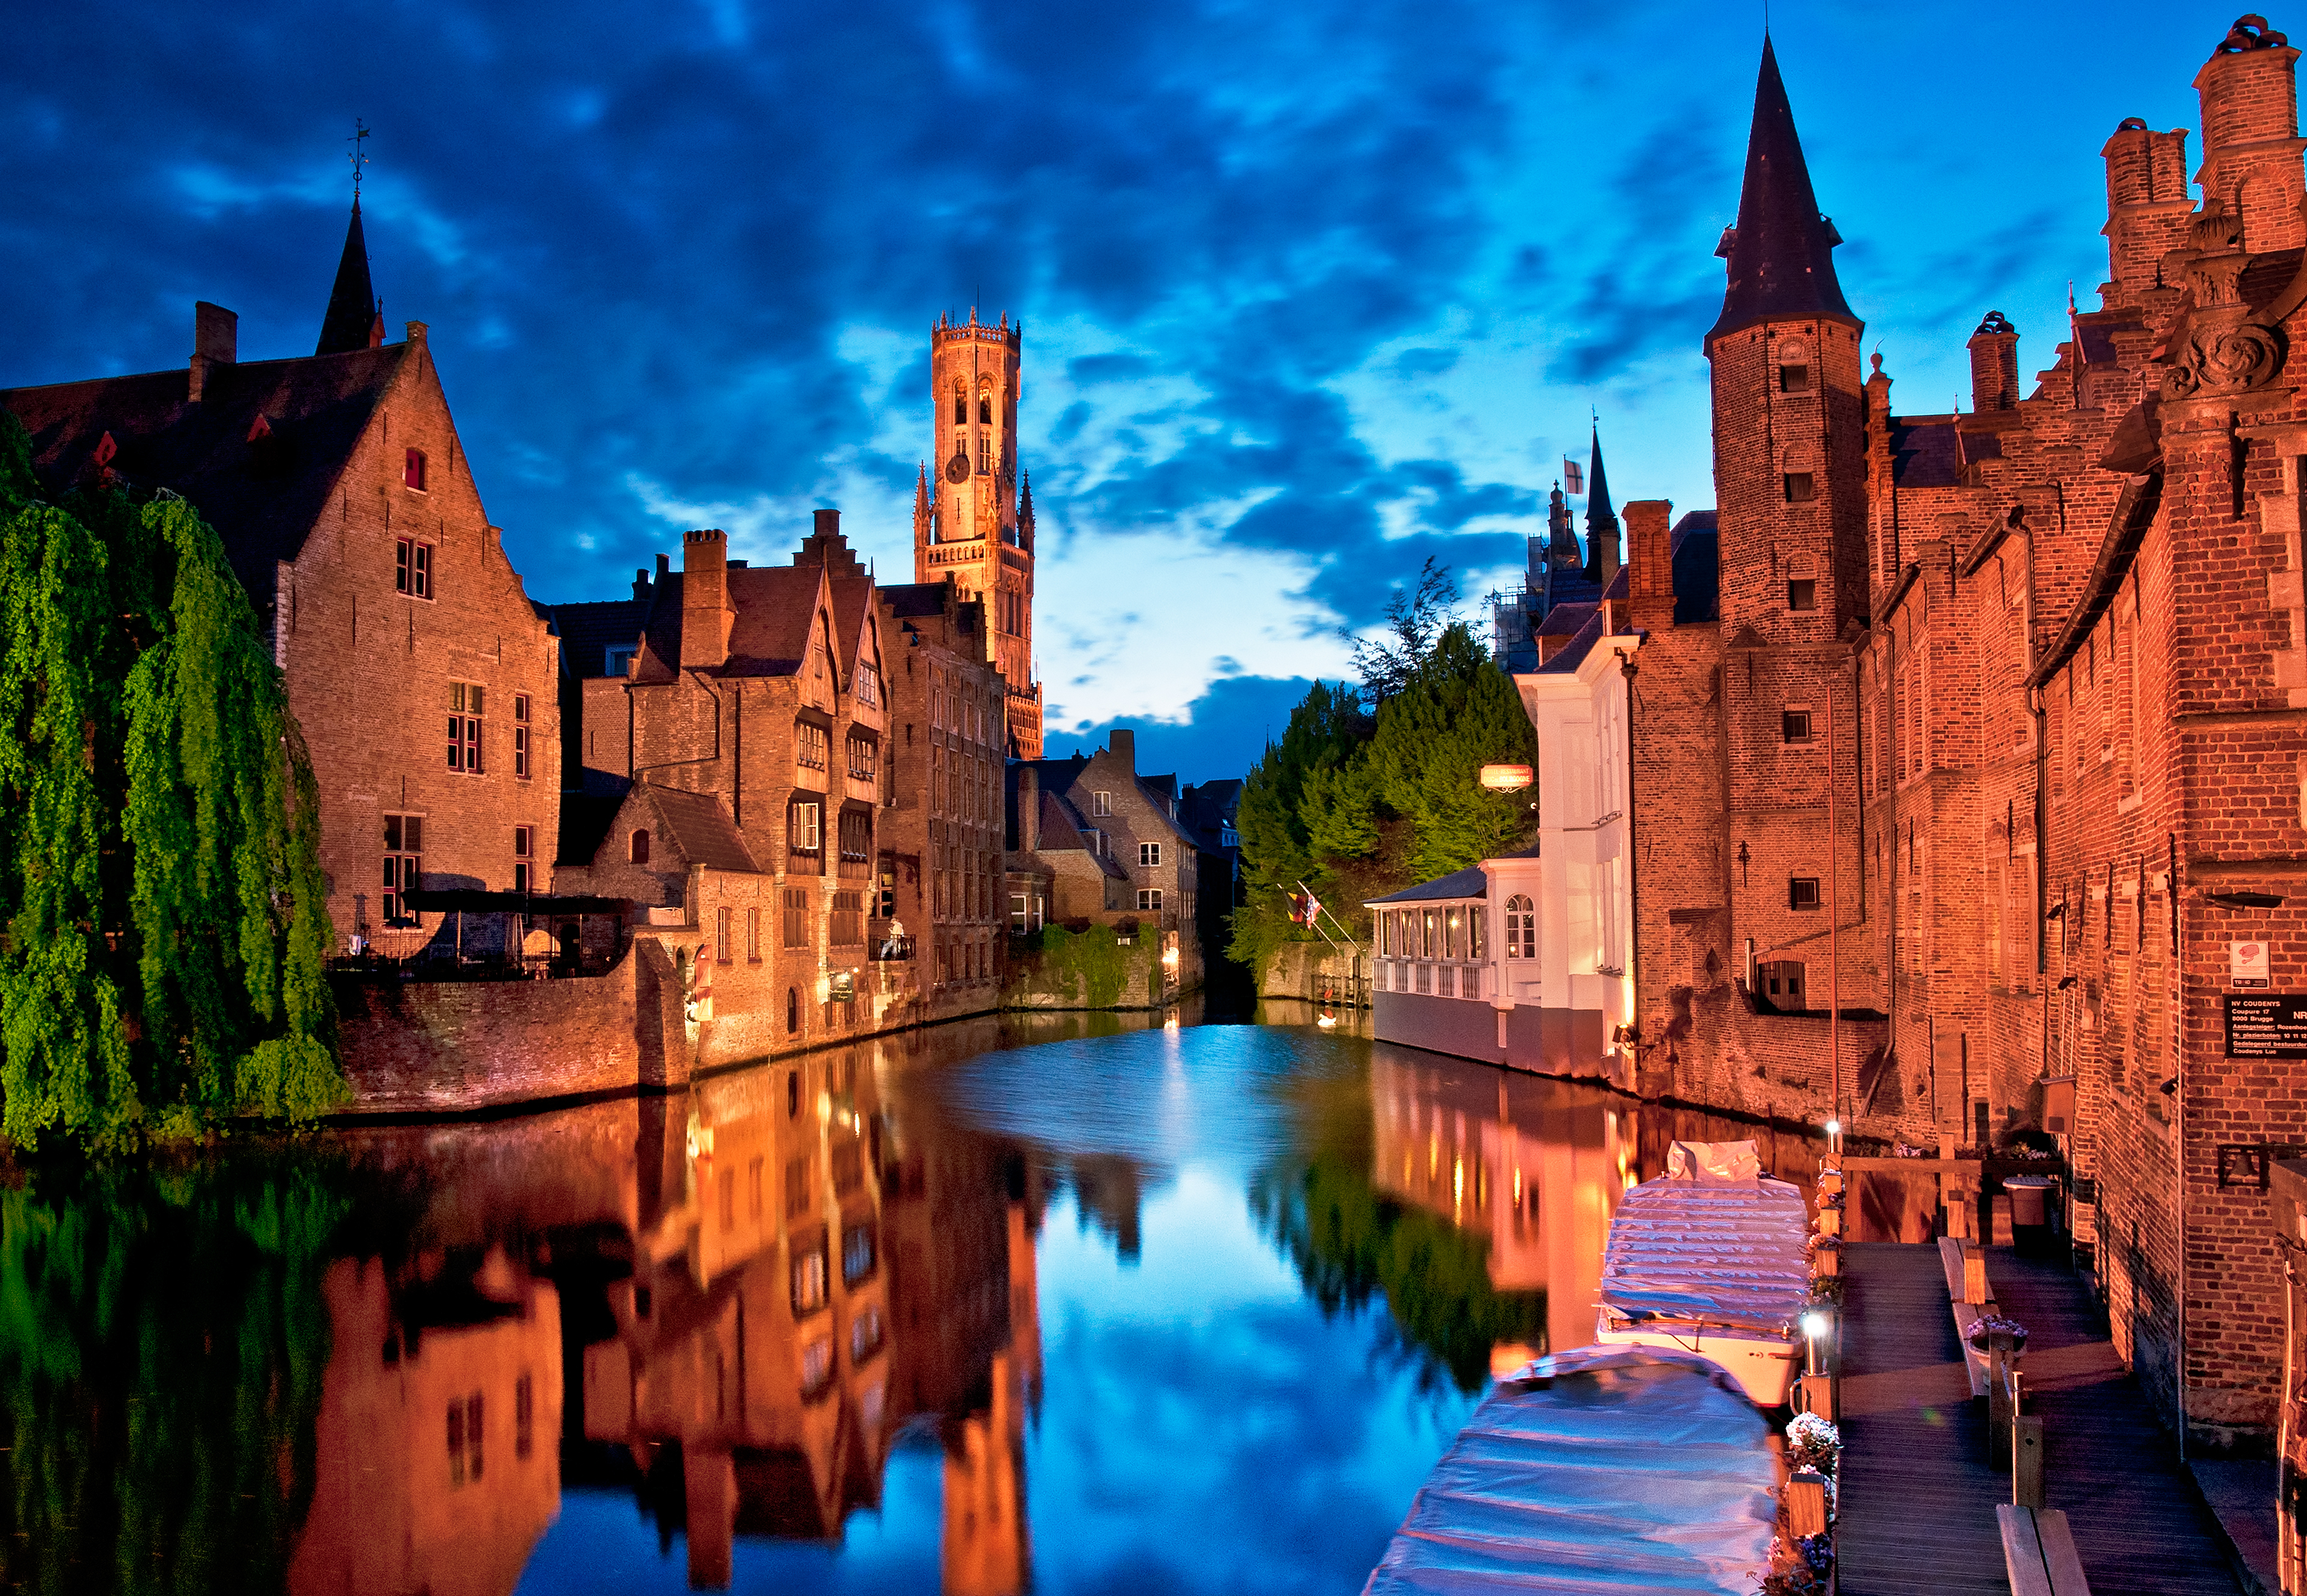 Nice Images Collection: Bruges Desktop Wallpapers